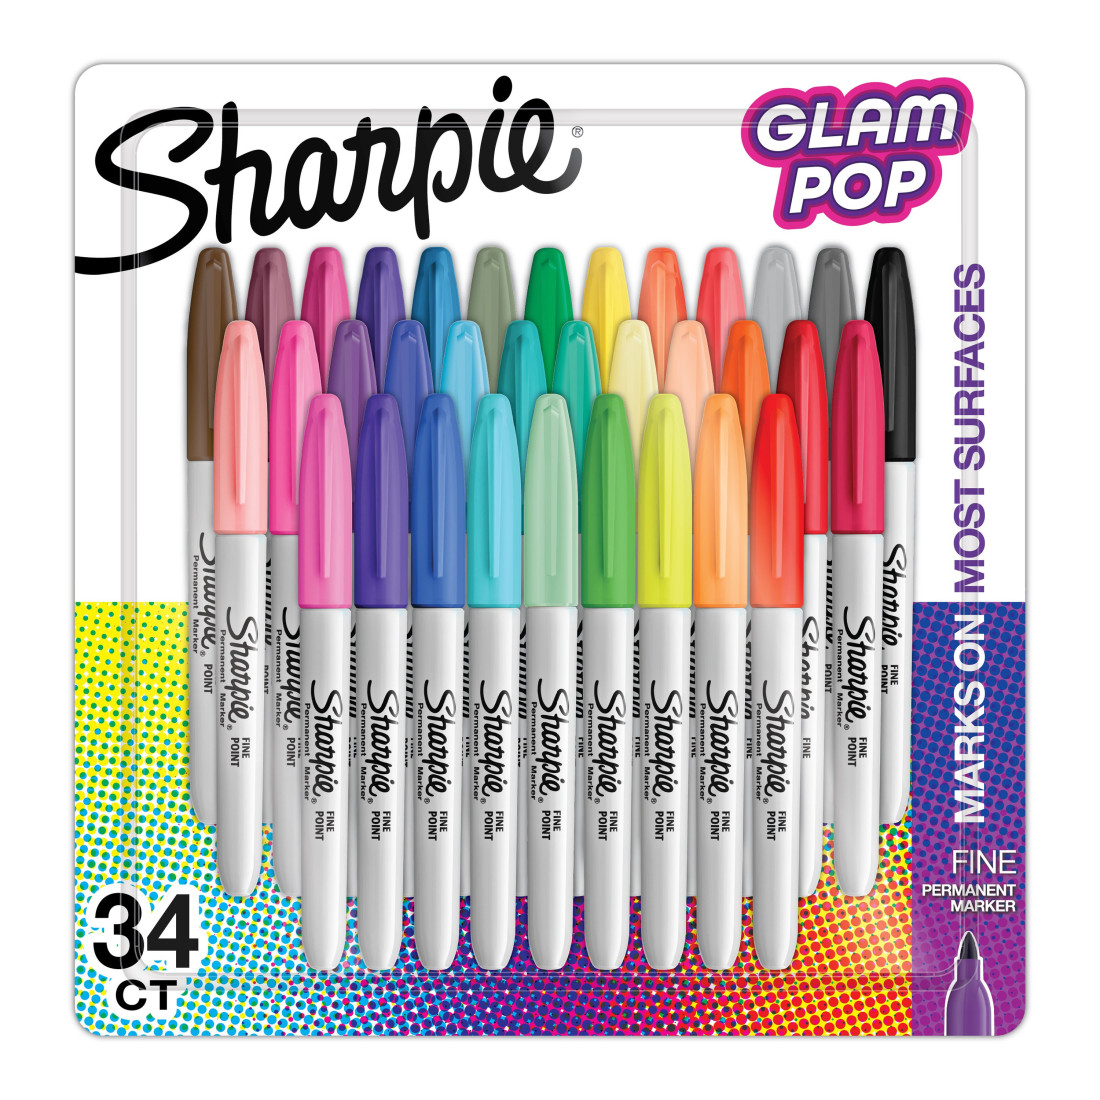 Sharpie Glam Pop Permanent Markers, 34 pcs Fine Point 2198891